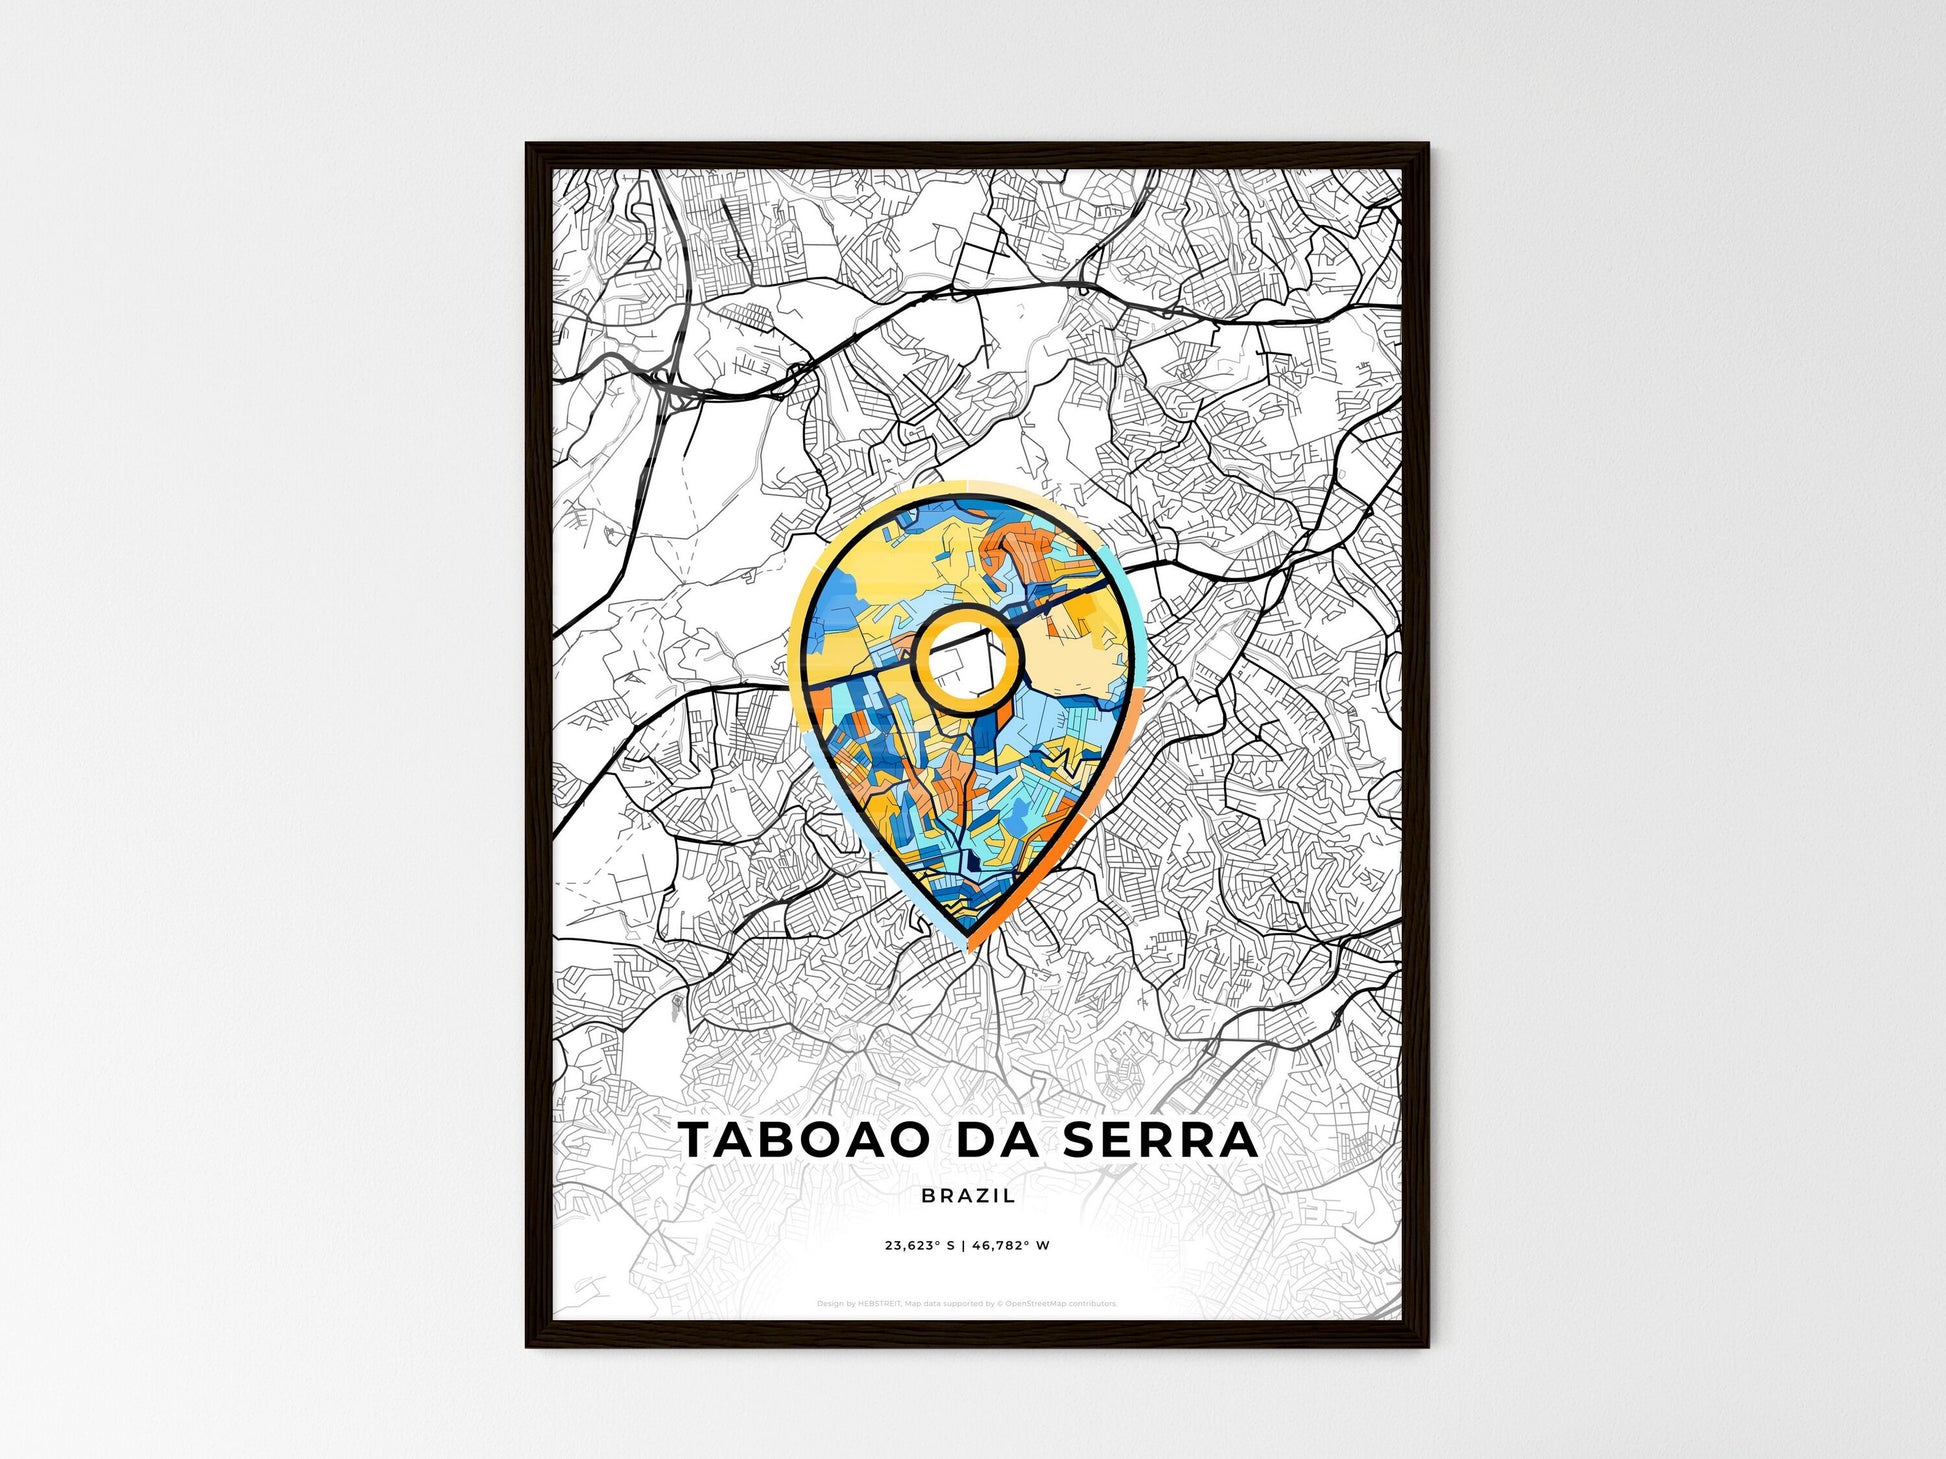 TABOAO DA SERRA BRAZIL minimal art map with a colorful icon. Style 1